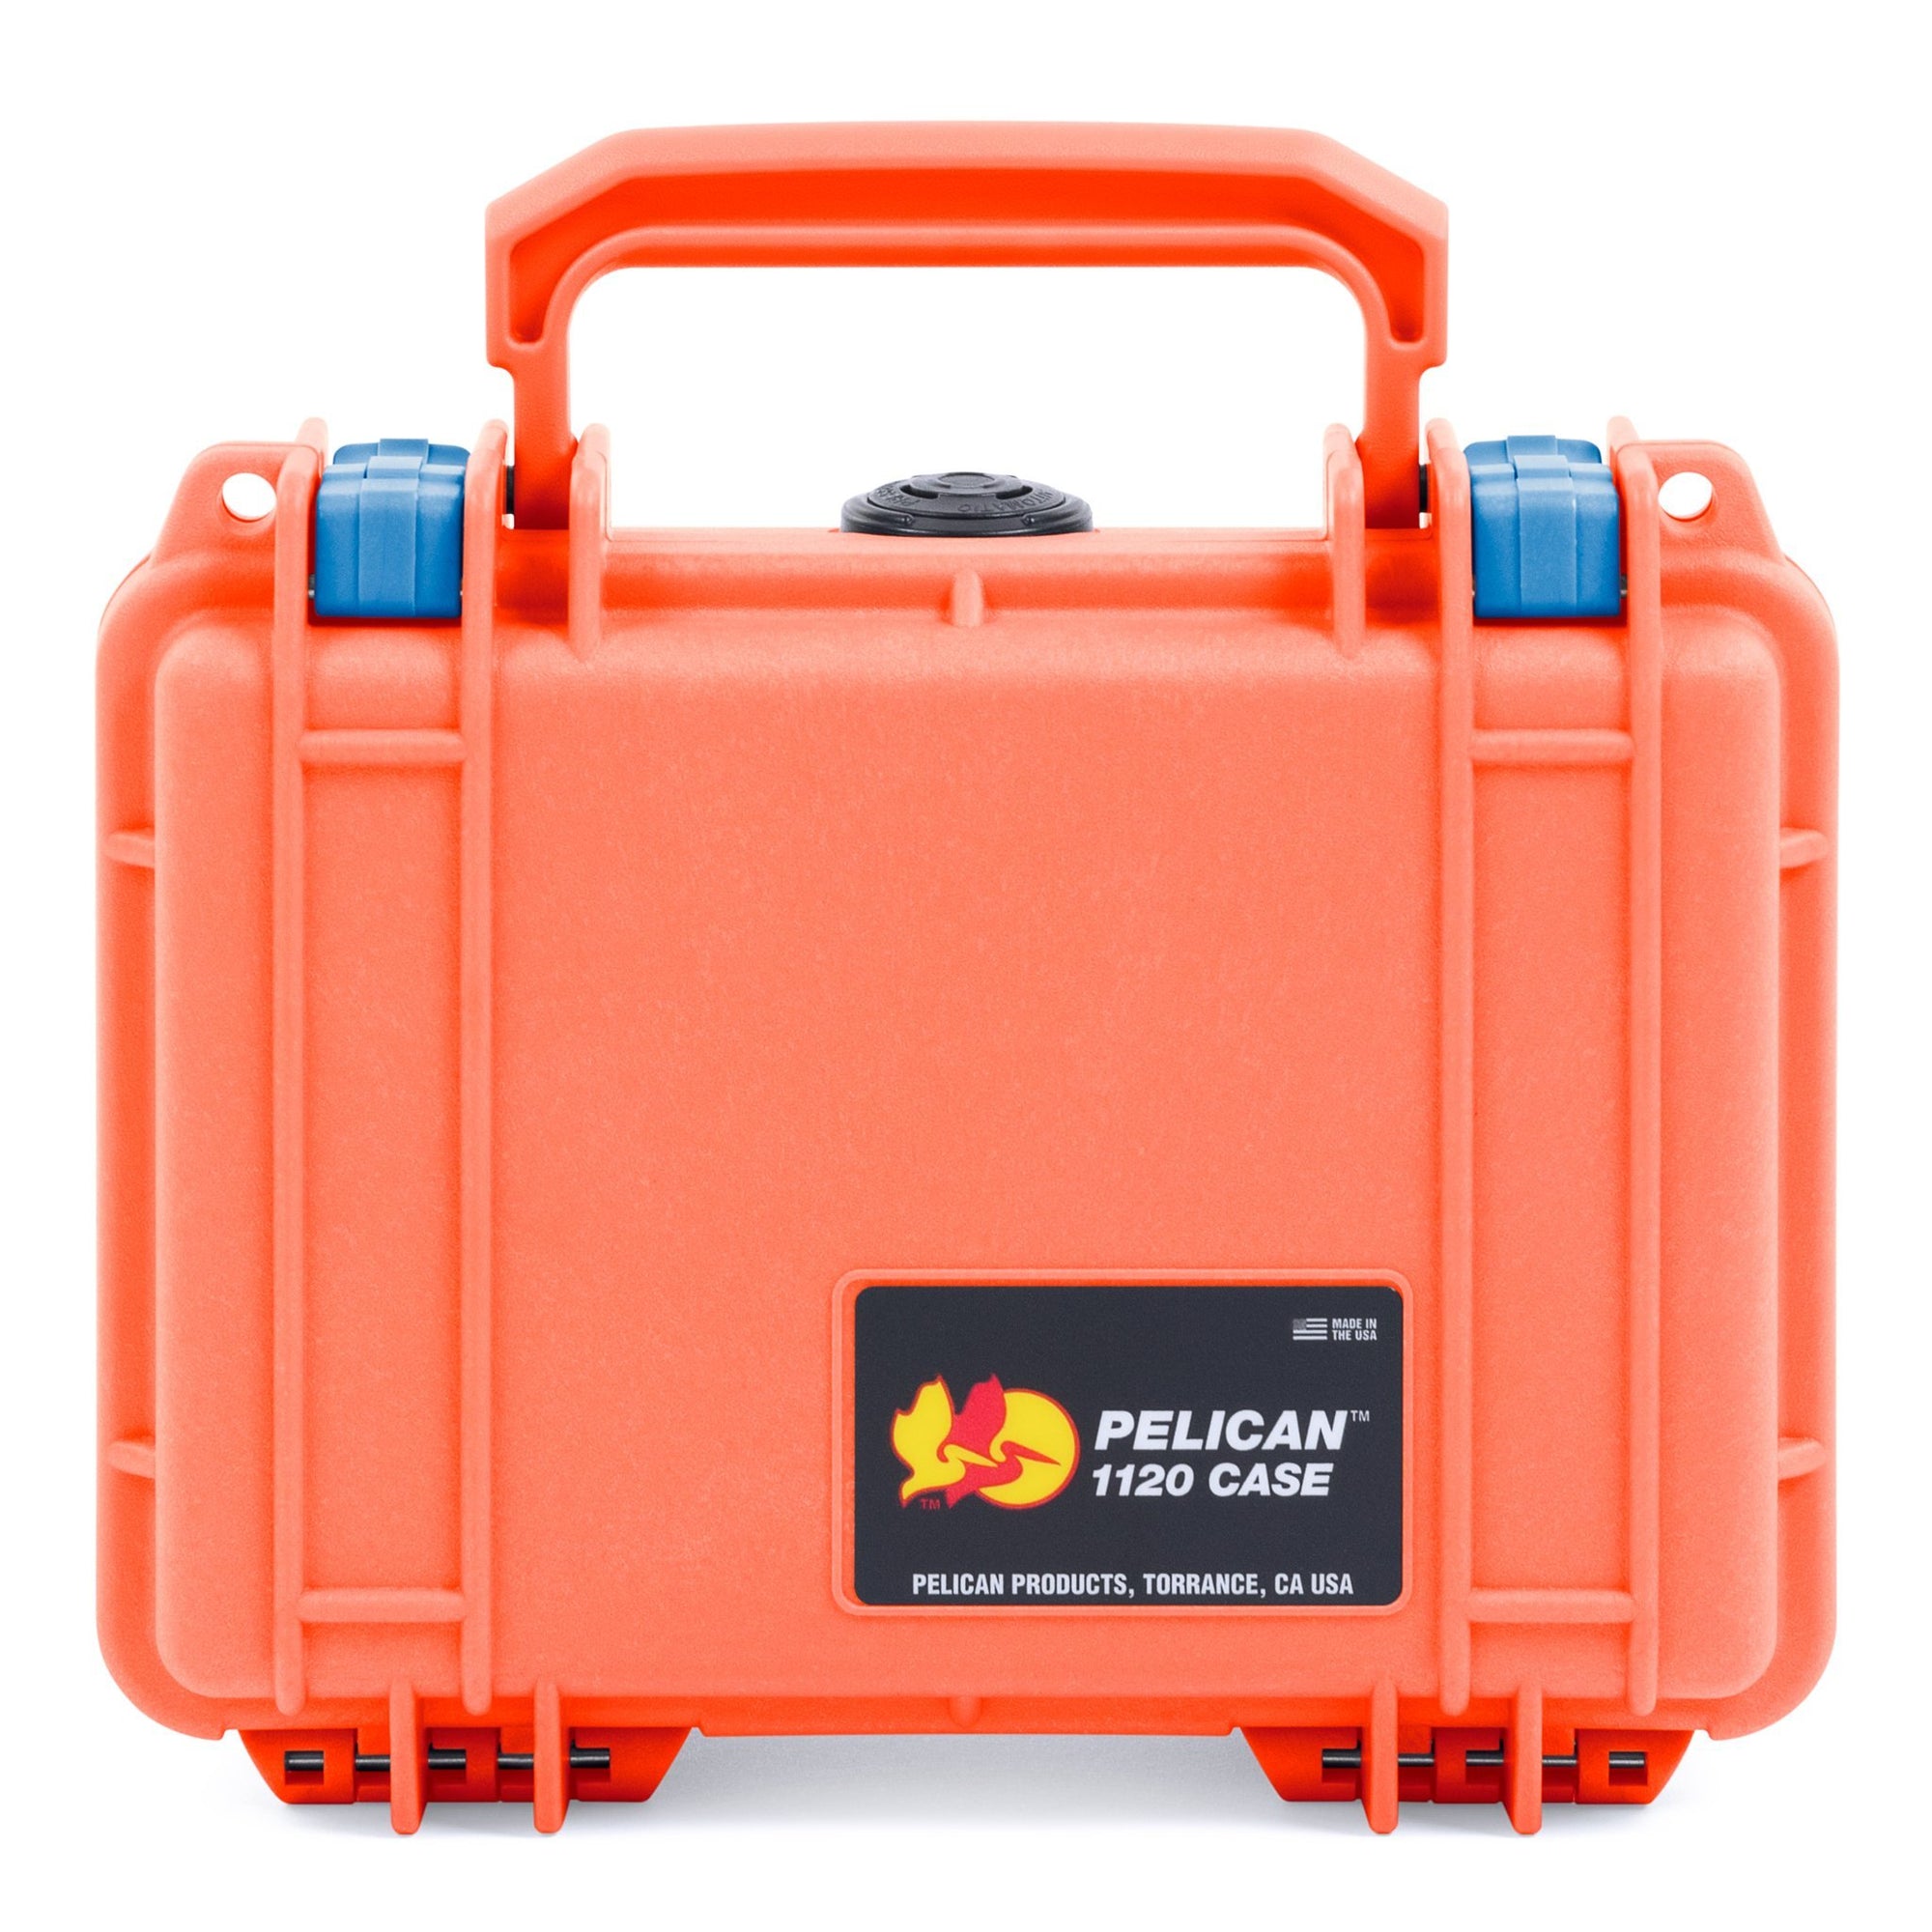 Pelican 1120 Case, Orange with Blue Latches ColorCase 